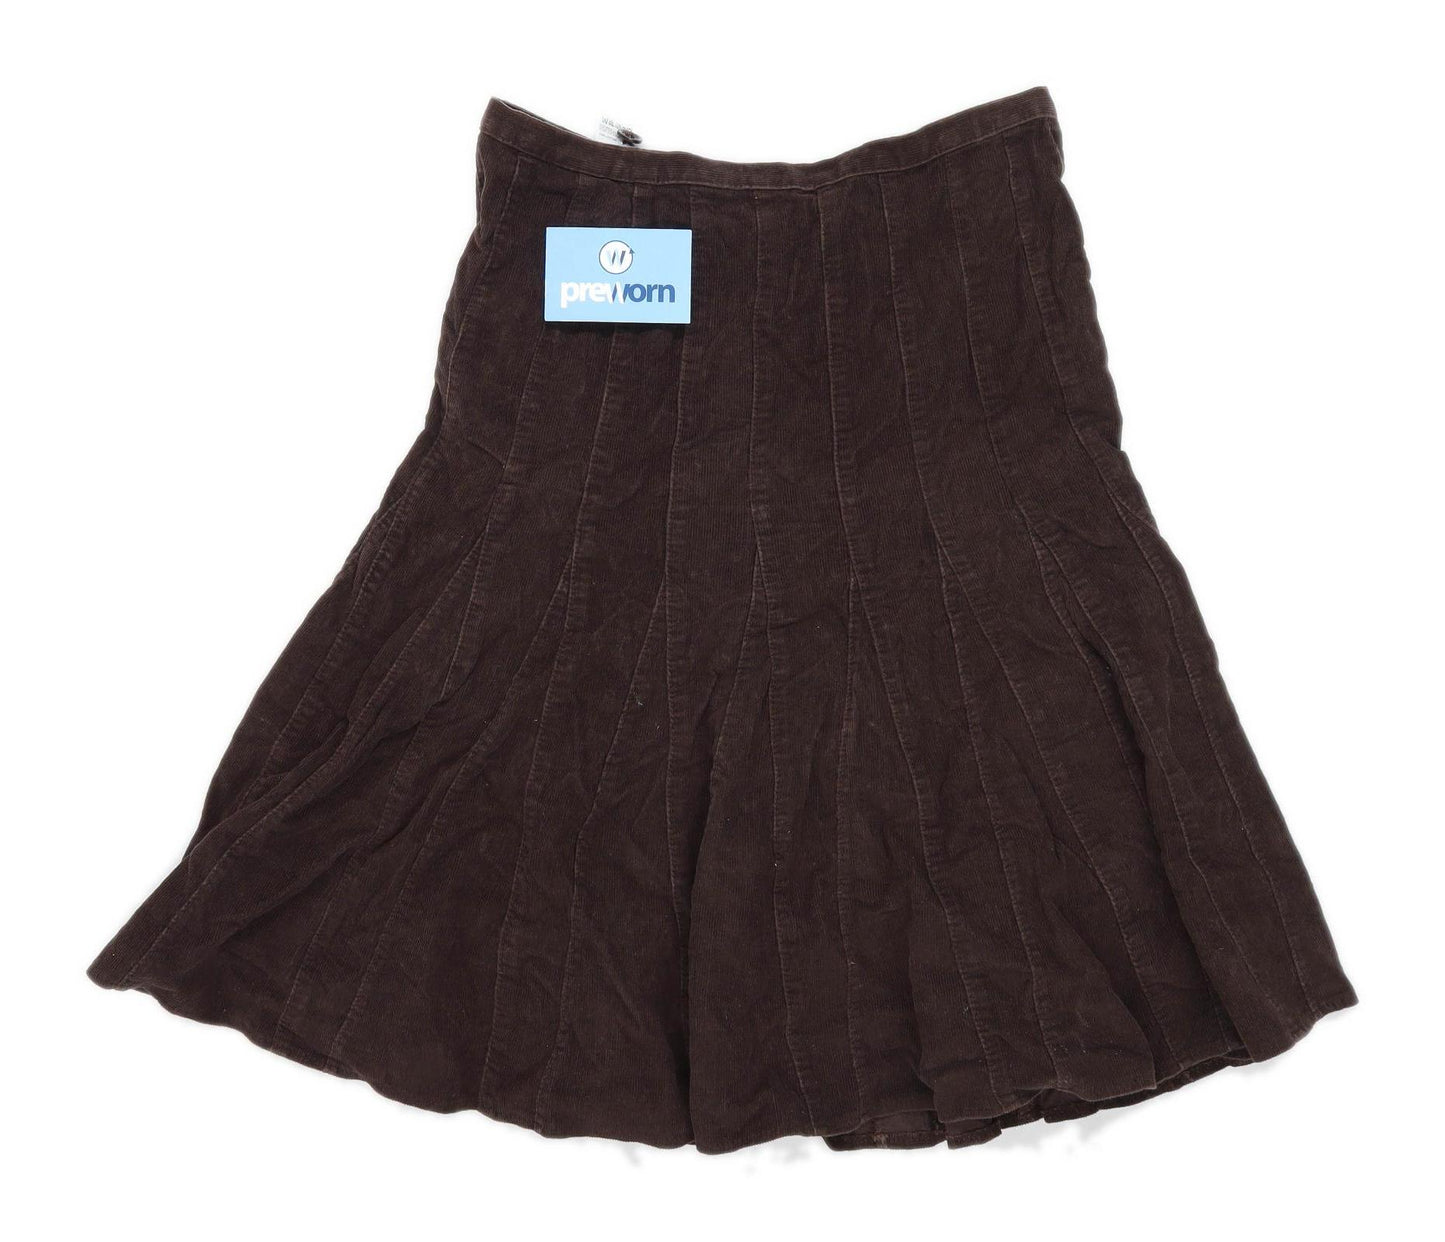 Marks & Spencer Womens Size 10 Cotton Brown Skirt (Regular)